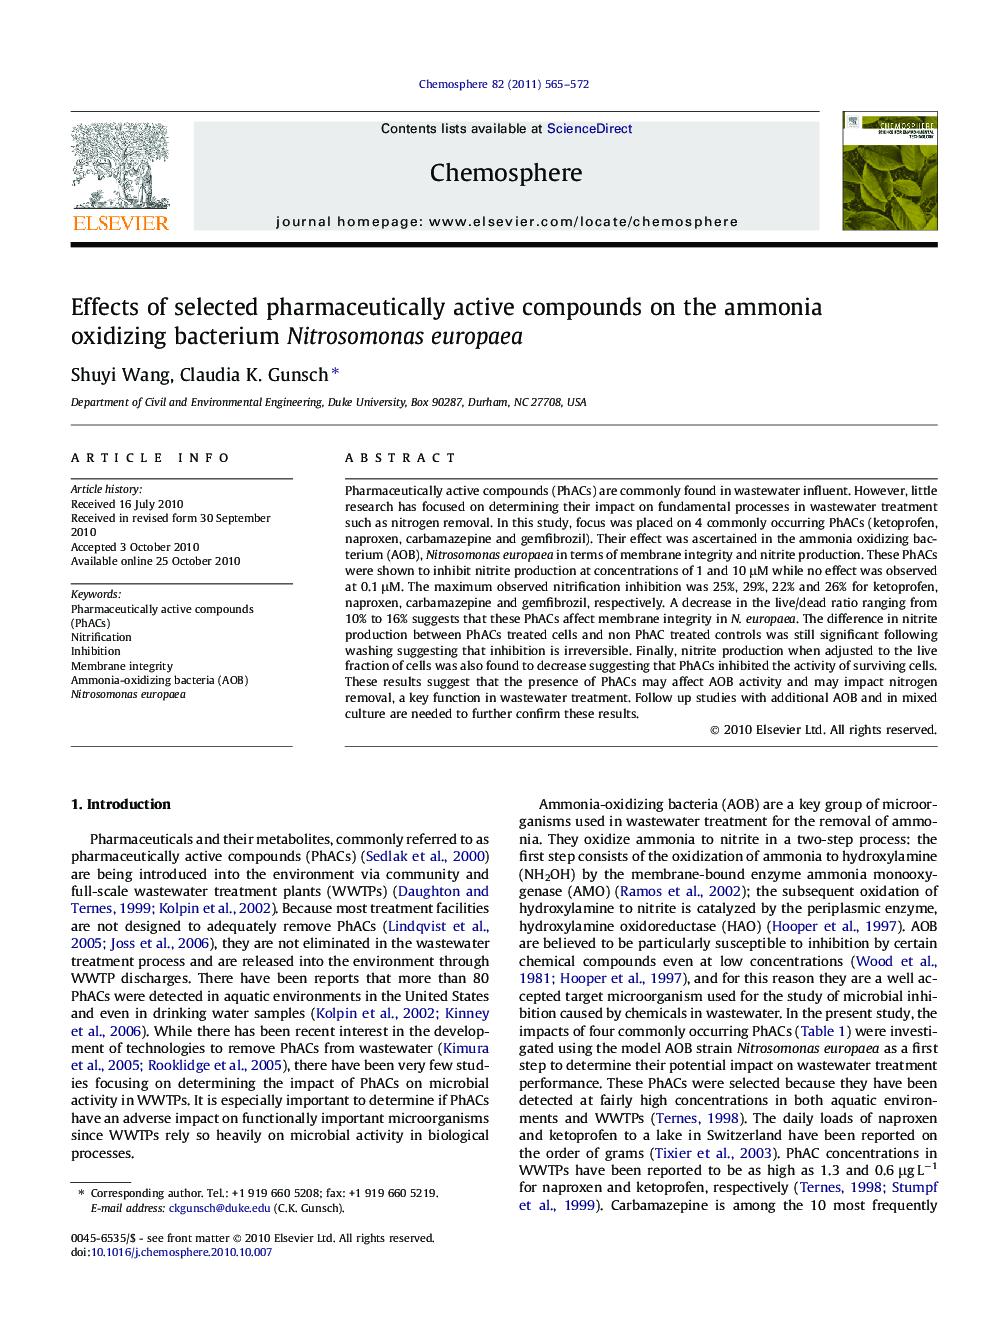 Effects of selected pharmaceutically active compounds on the ammonia oxidizing bacterium Nitrosomonaseuropaea